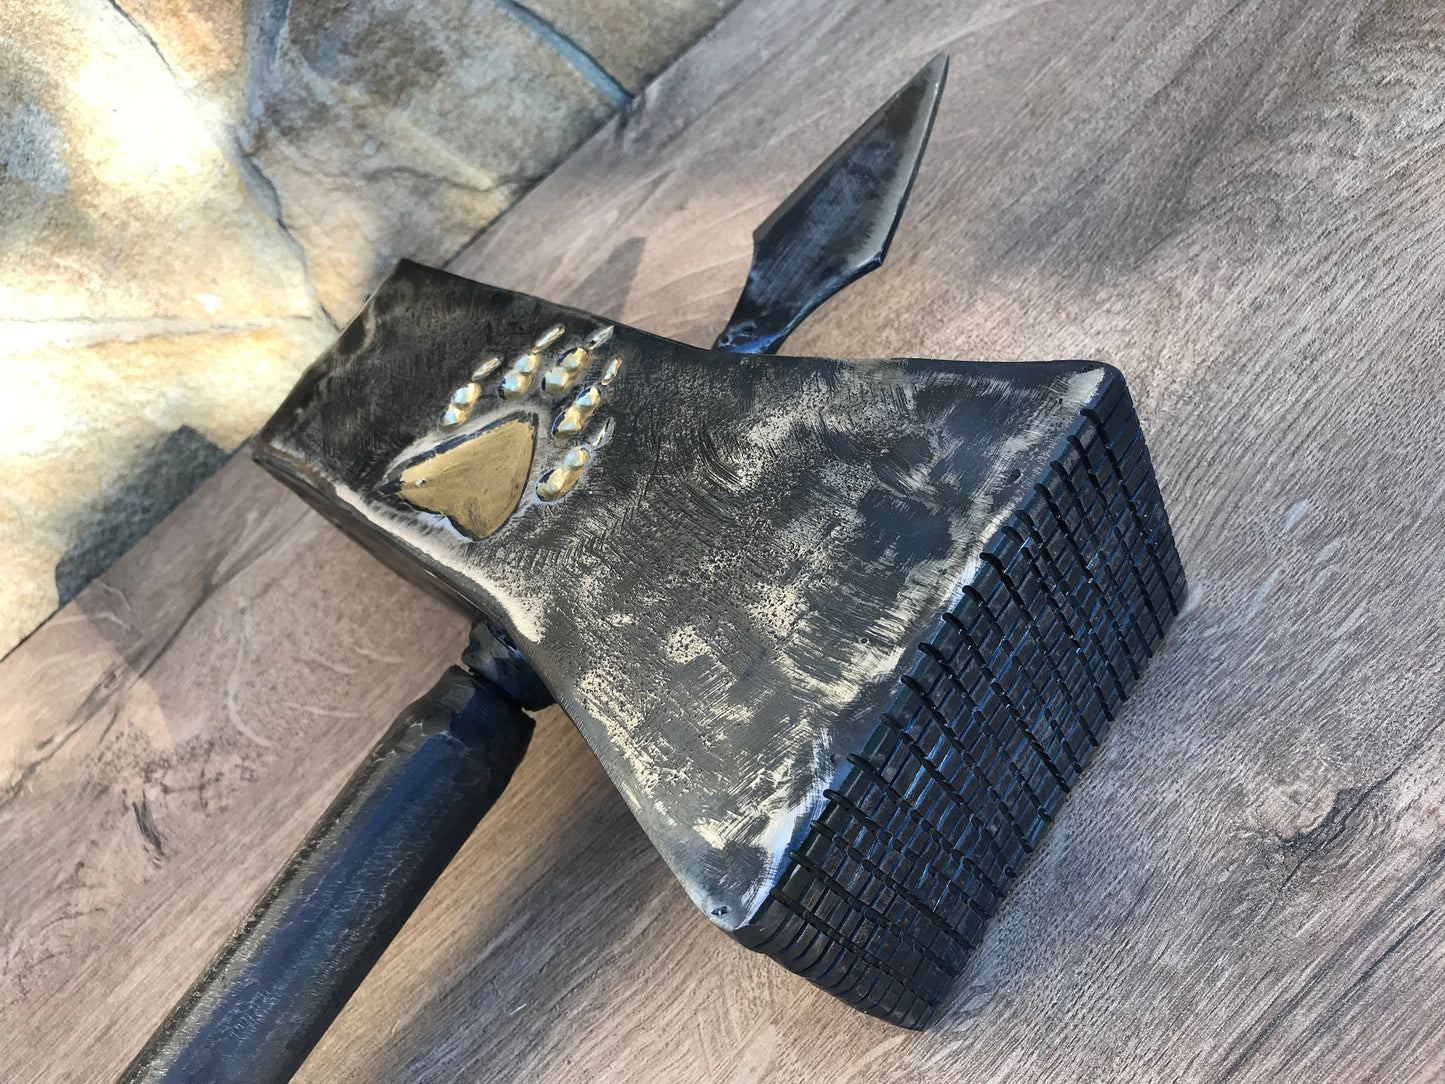 Decorative hammer, hammer, cosplay weapon, cosplay armor, viking hammer, viking axe, customized hammer, iron anniversary gift,tools,dad gift